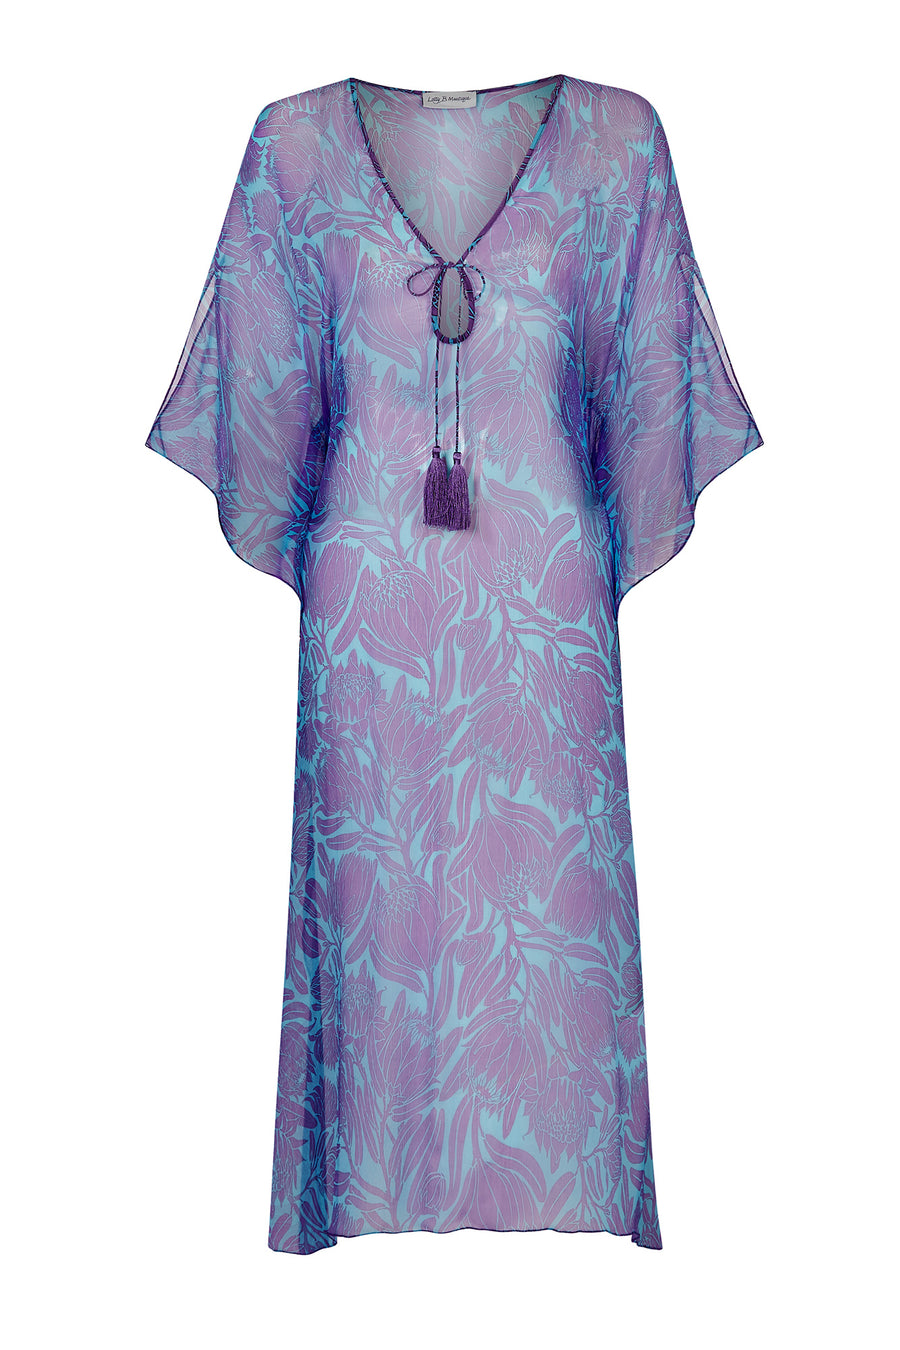 Designer silk kaftan, Ellie violet & turquiose blue Protea print by Lotty B Mustique